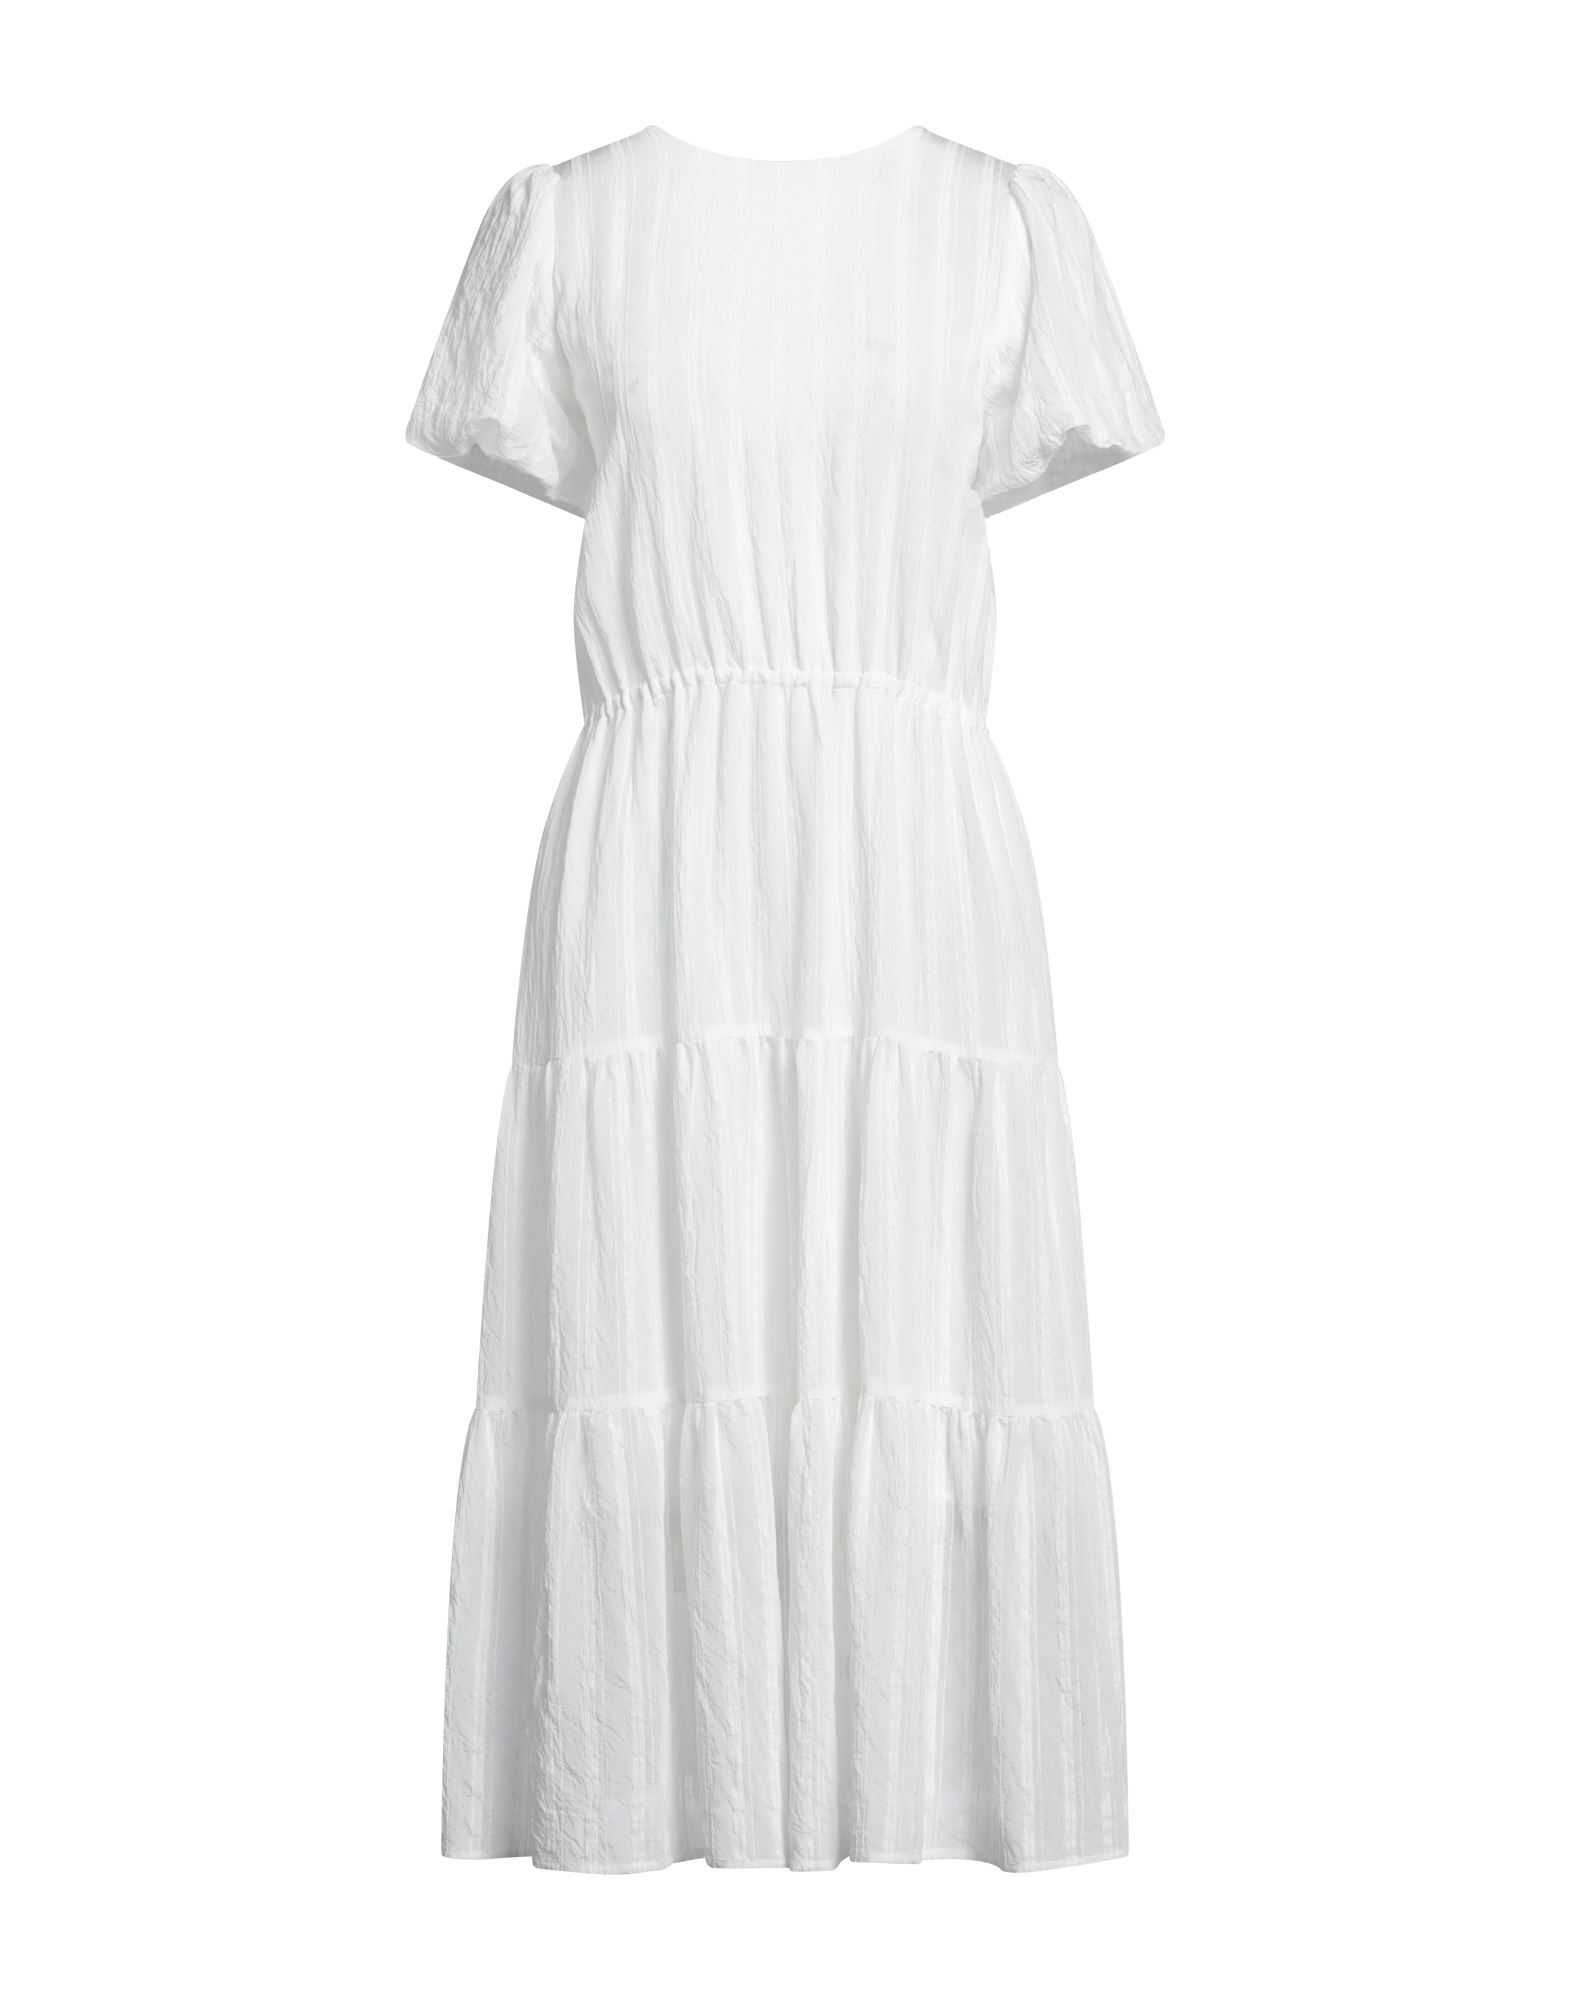 JADICTED Midi-kleid Damen Weiß von JADICTED